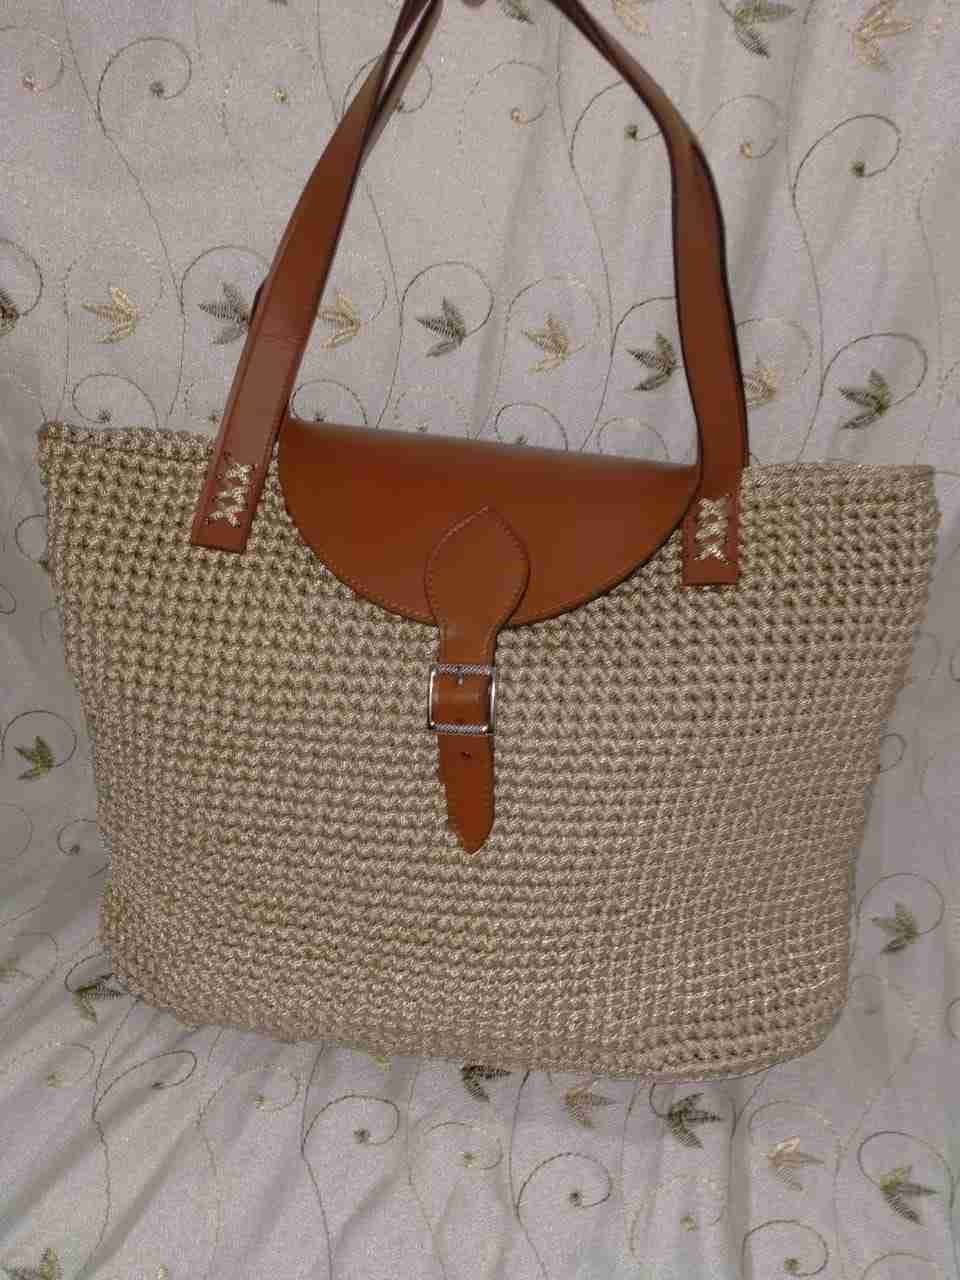 A crochet bag, burlap thread, with a genuine leather hand